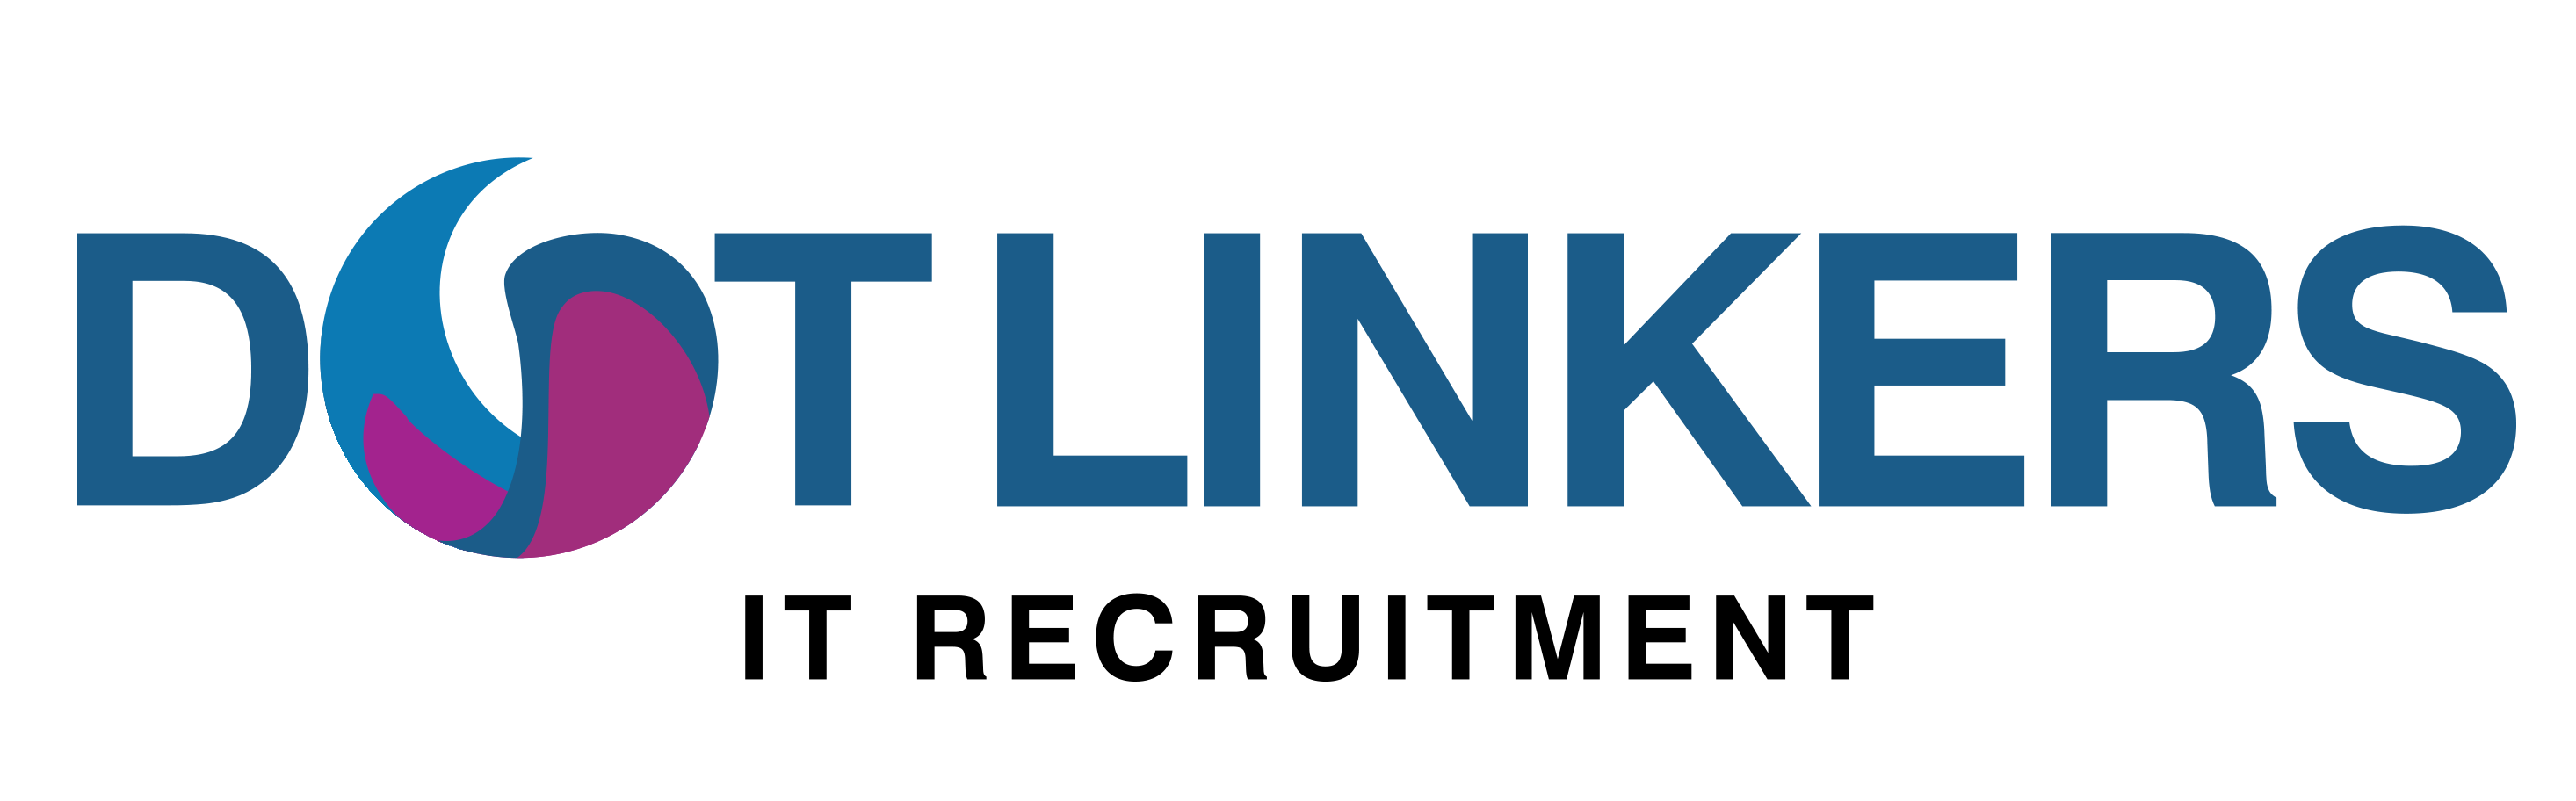 dotLinkers logo